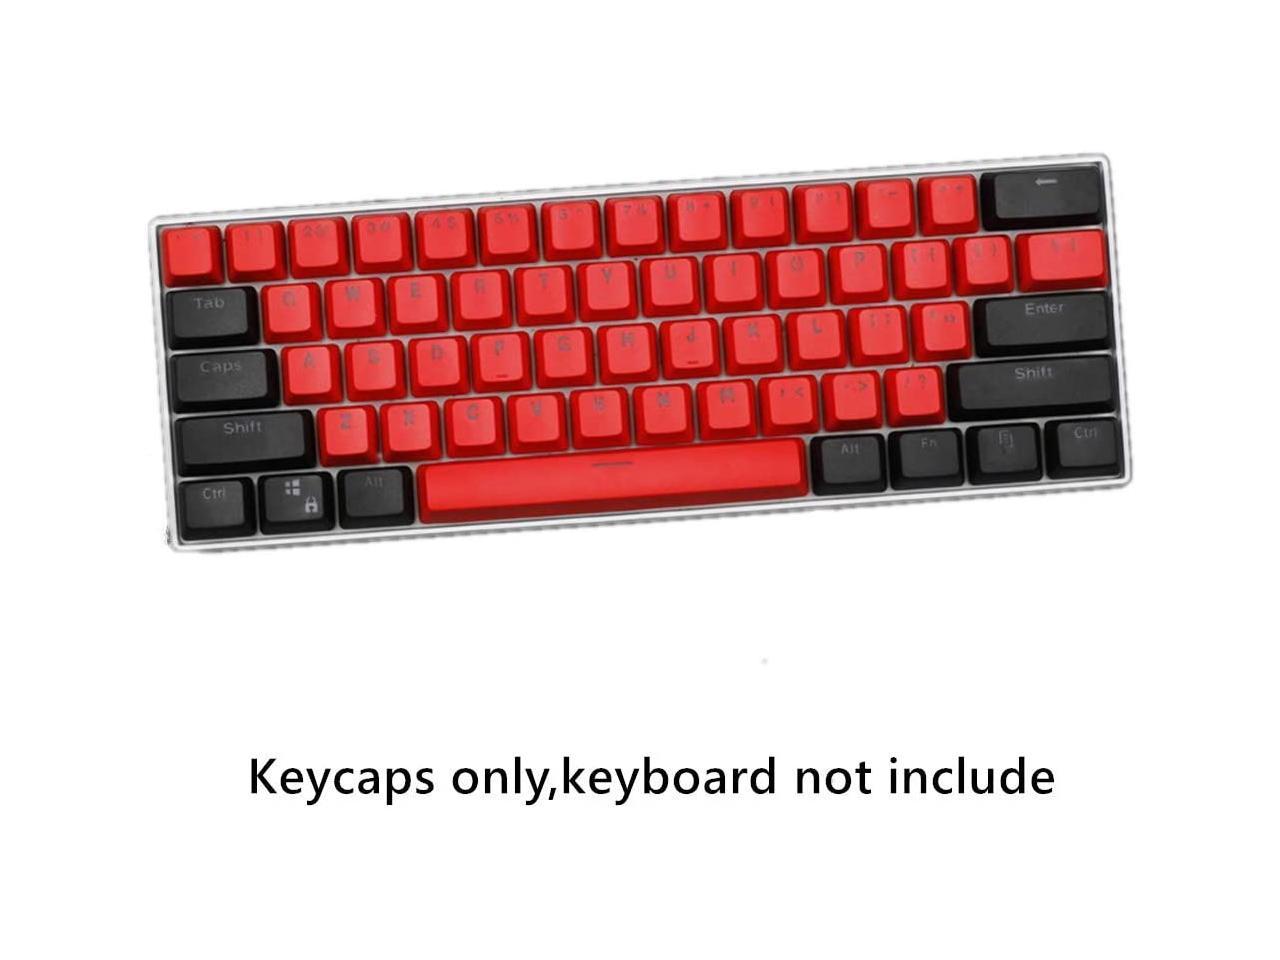 CORN 61 Key Layout OEM Profile PBT Thick Keycaps for 60% Mechanical Keyboard for RK61,GANSS ALT61,IKBC Poker,Anne PRO,GH60,iqunix f60 Red/Black 